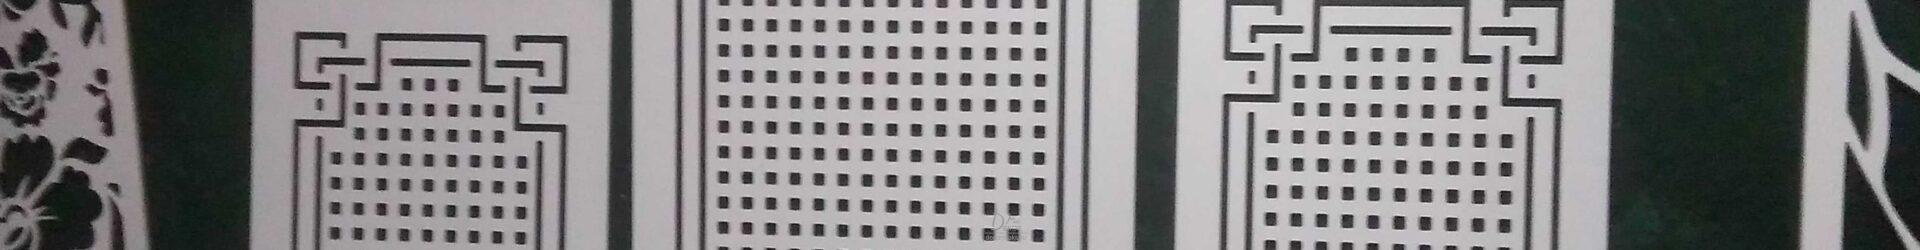 Декоративные экраны на радиатор по размерам заказчика 0,7м | Волгоград